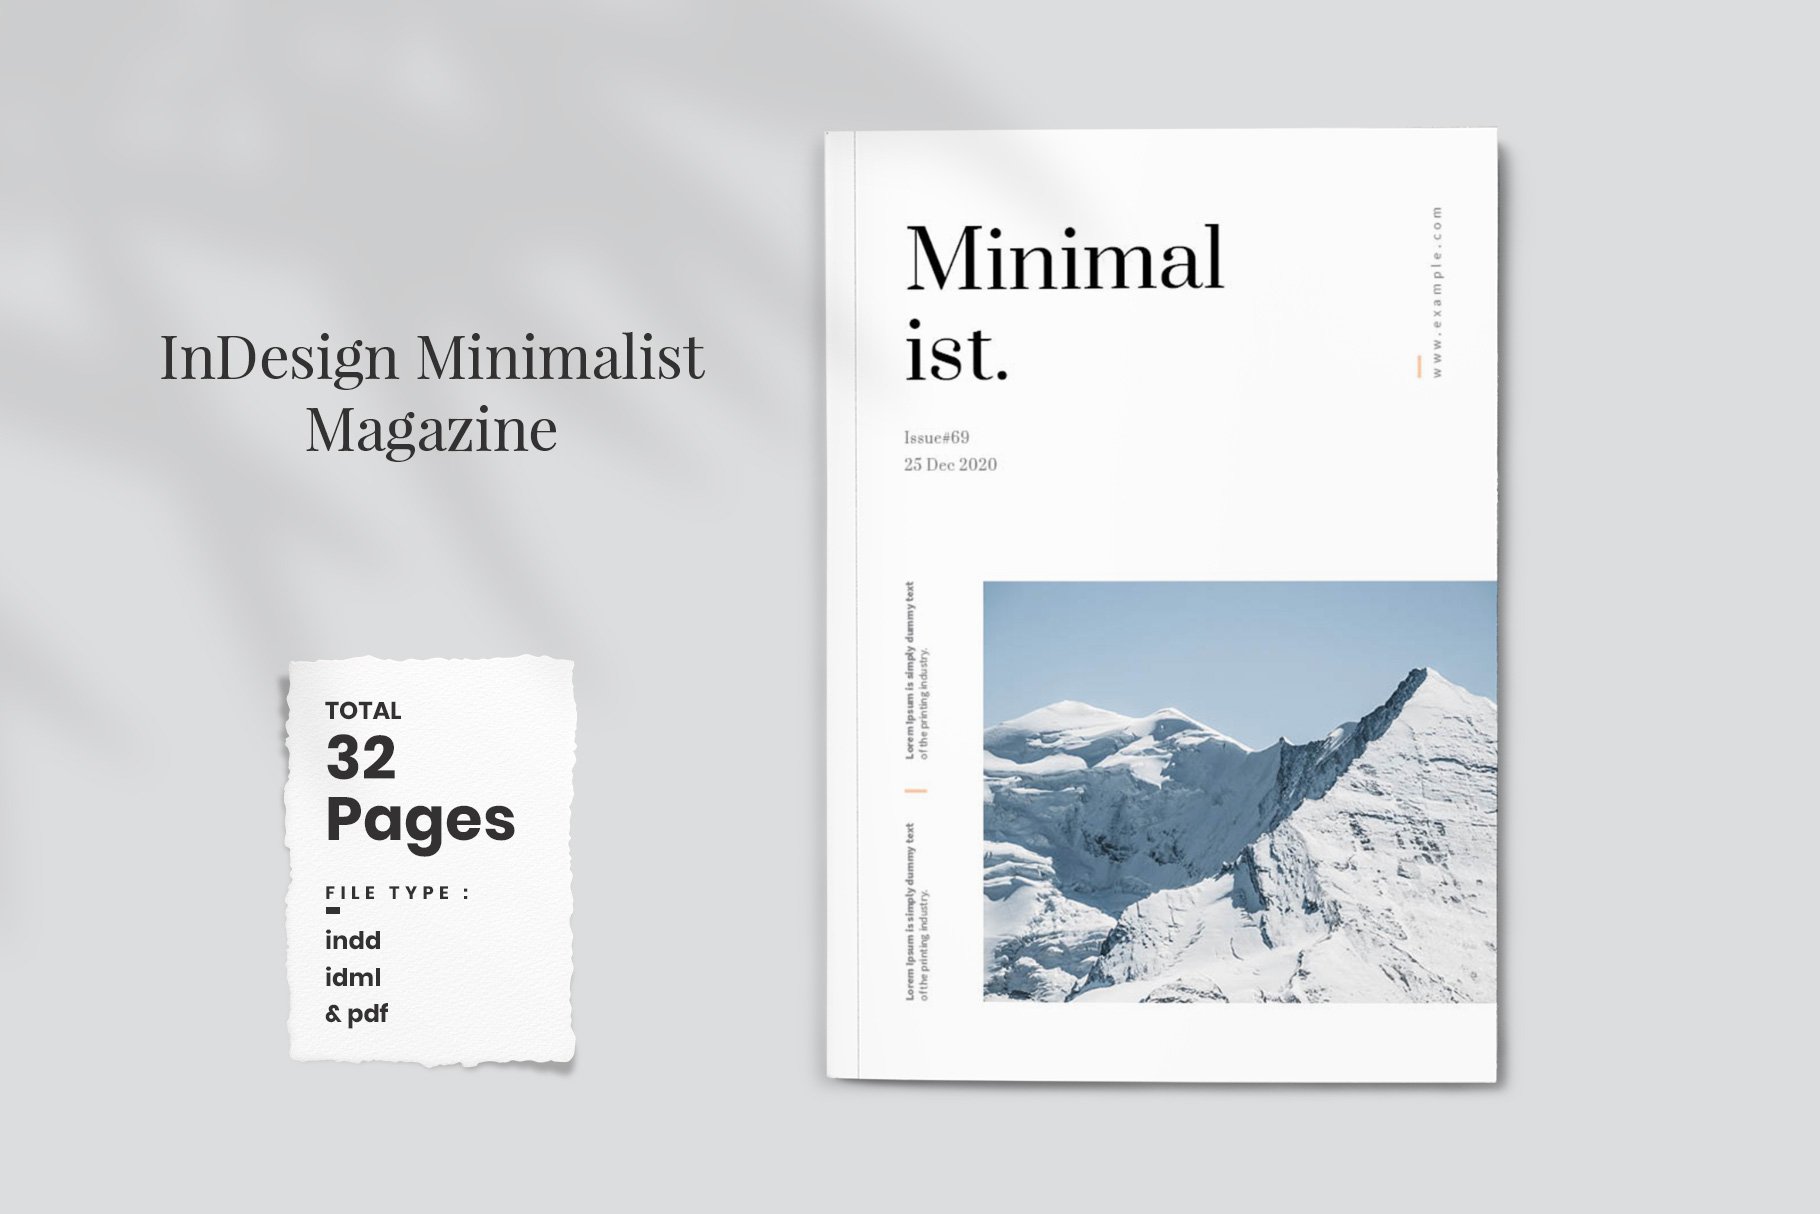 indesign minimalist magazine 298